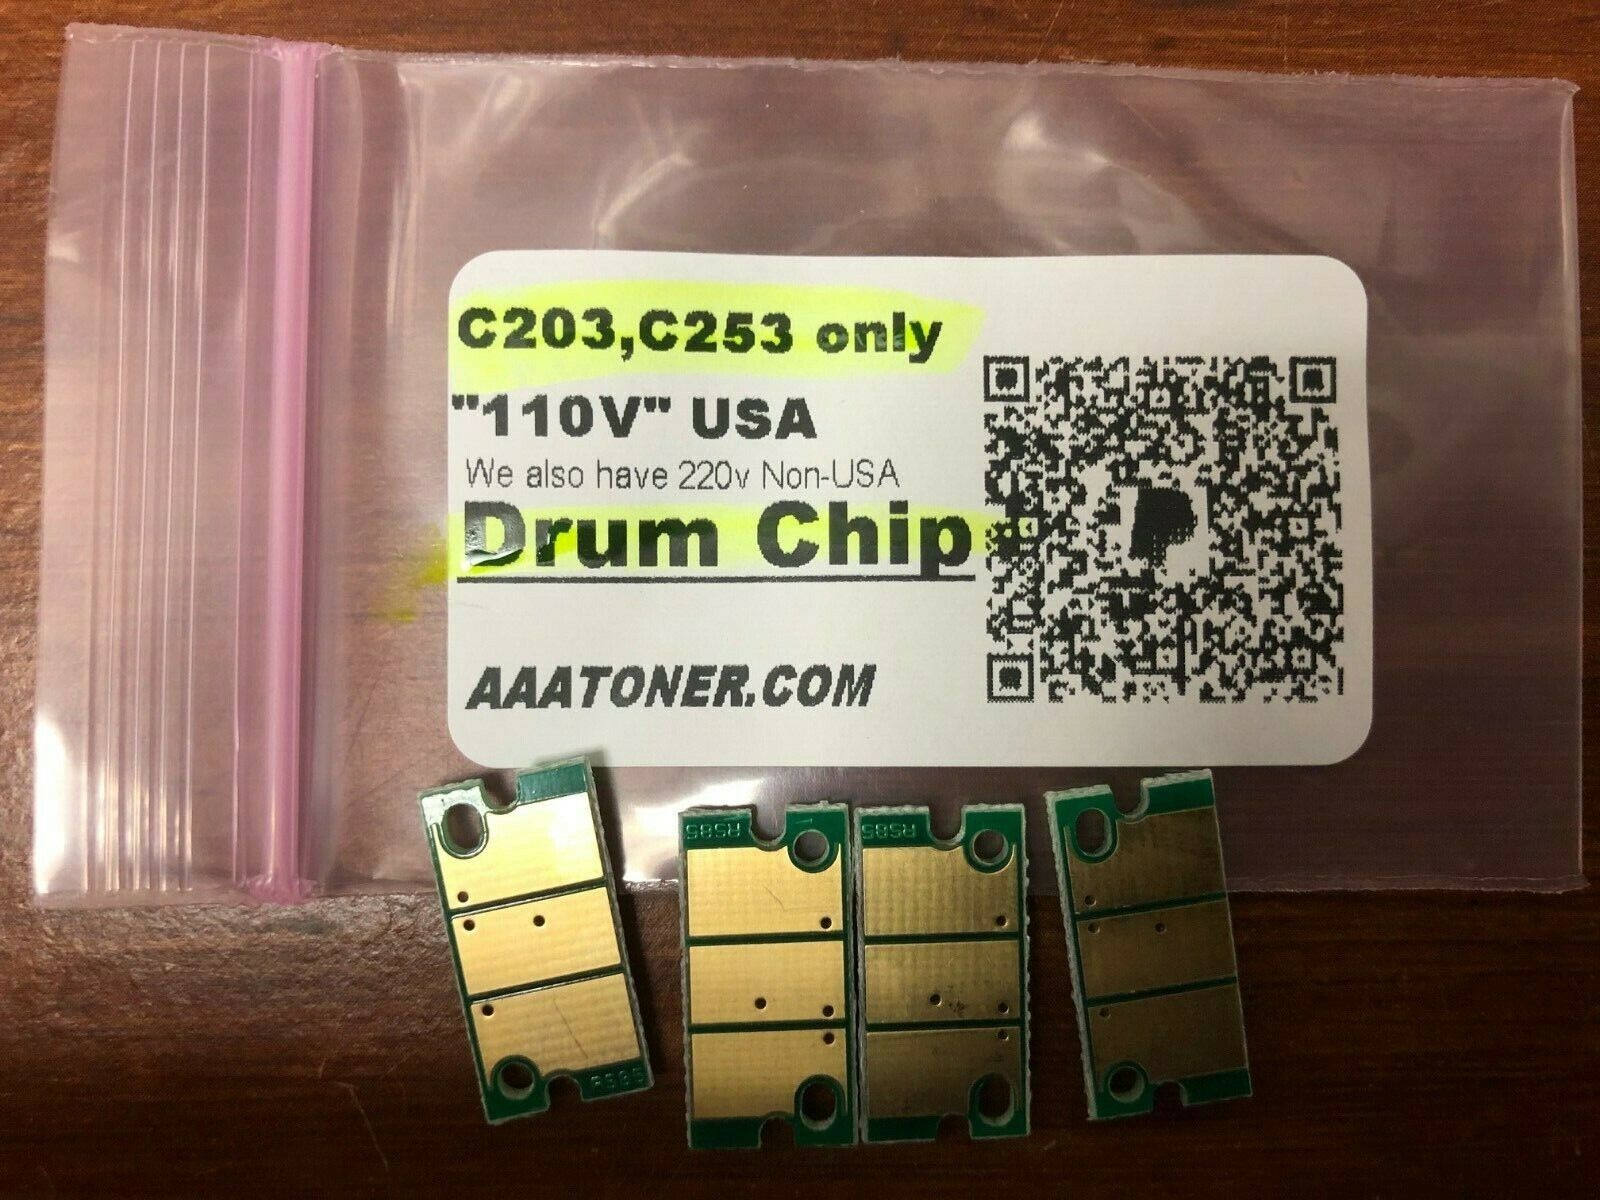 4 x Imaging Unit Drum Chip Refill for Konica Minolta Bizhub C203, C253 - ONLY 